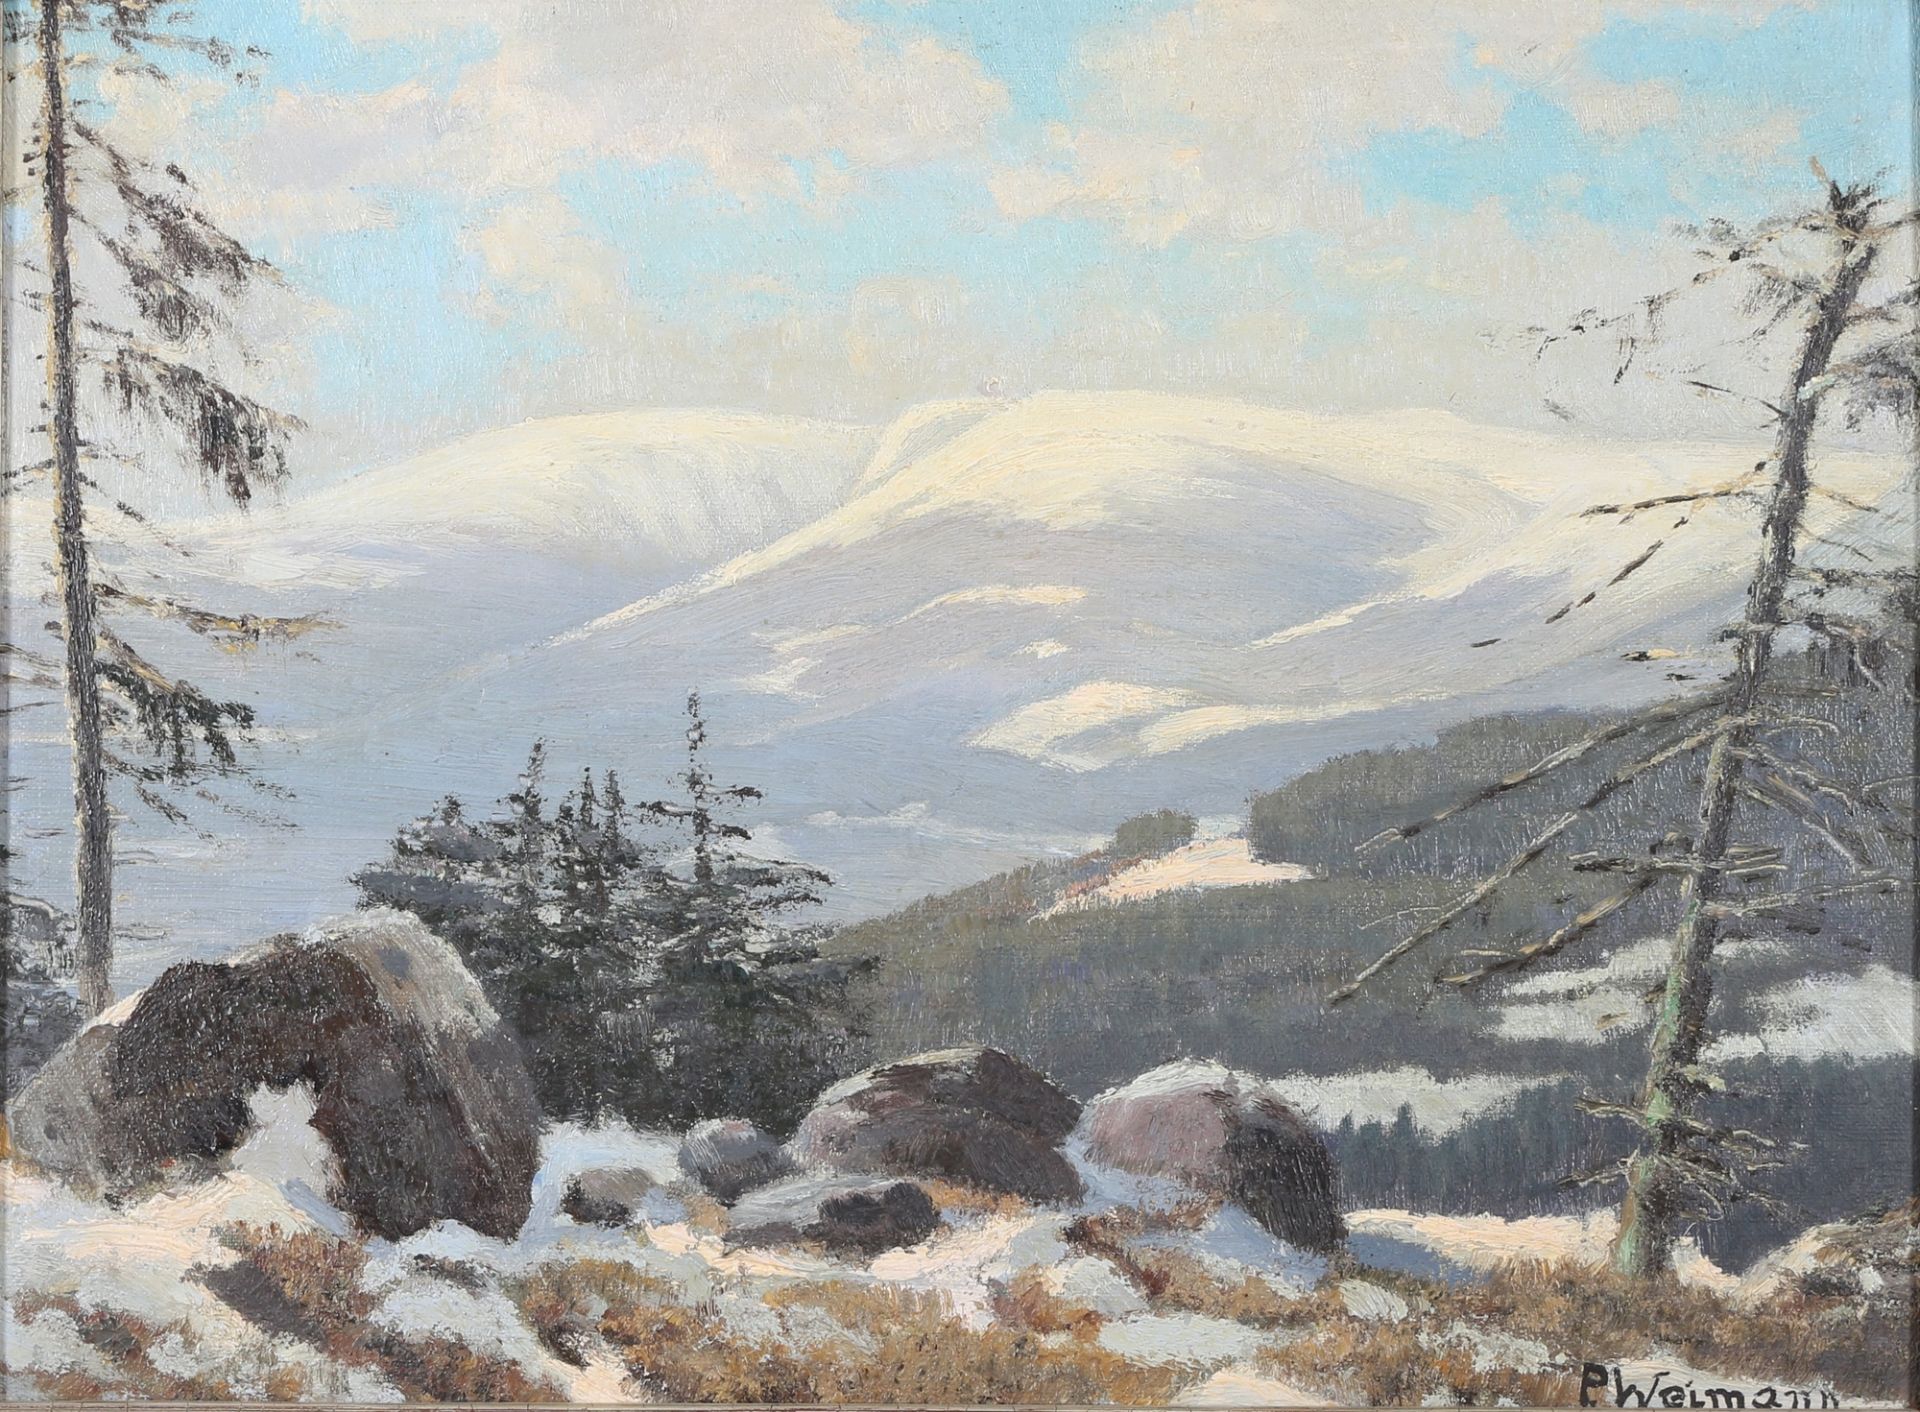 Paul Weimann (1867-1945) Winterliche Berglandschaft, winter mountainscape,